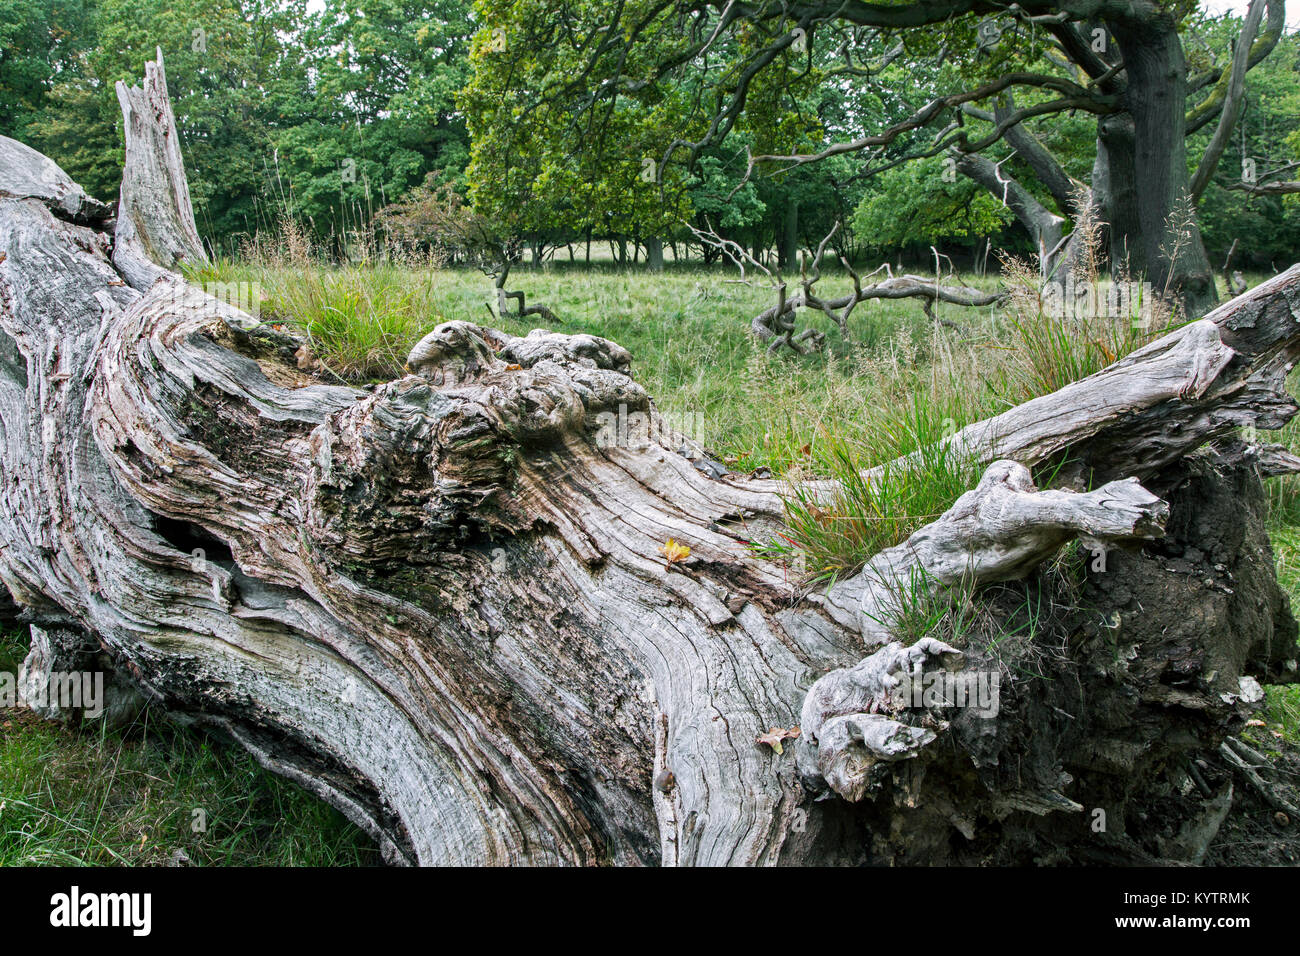 Gefallenen alter englischer Eiche/Pedunculate oak tree (Quercus robur) in jægersborg Dyrehave/Dyrehaven nahe Kopenhagen, Dänemark Stockfoto